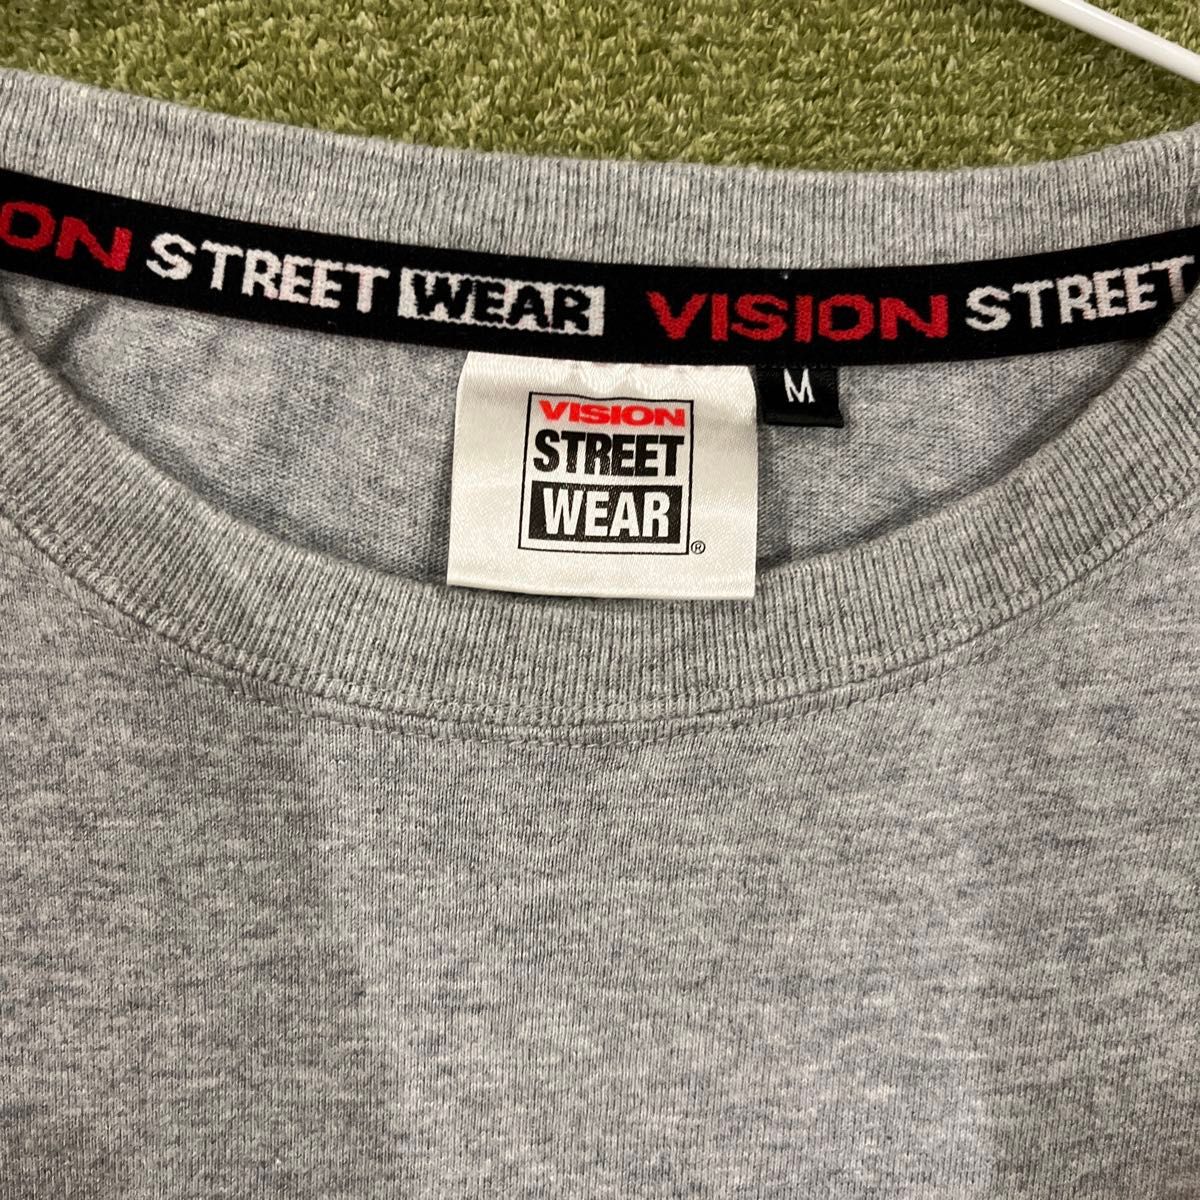 VISION STREET WEAR Tシャツ メンズM【b】